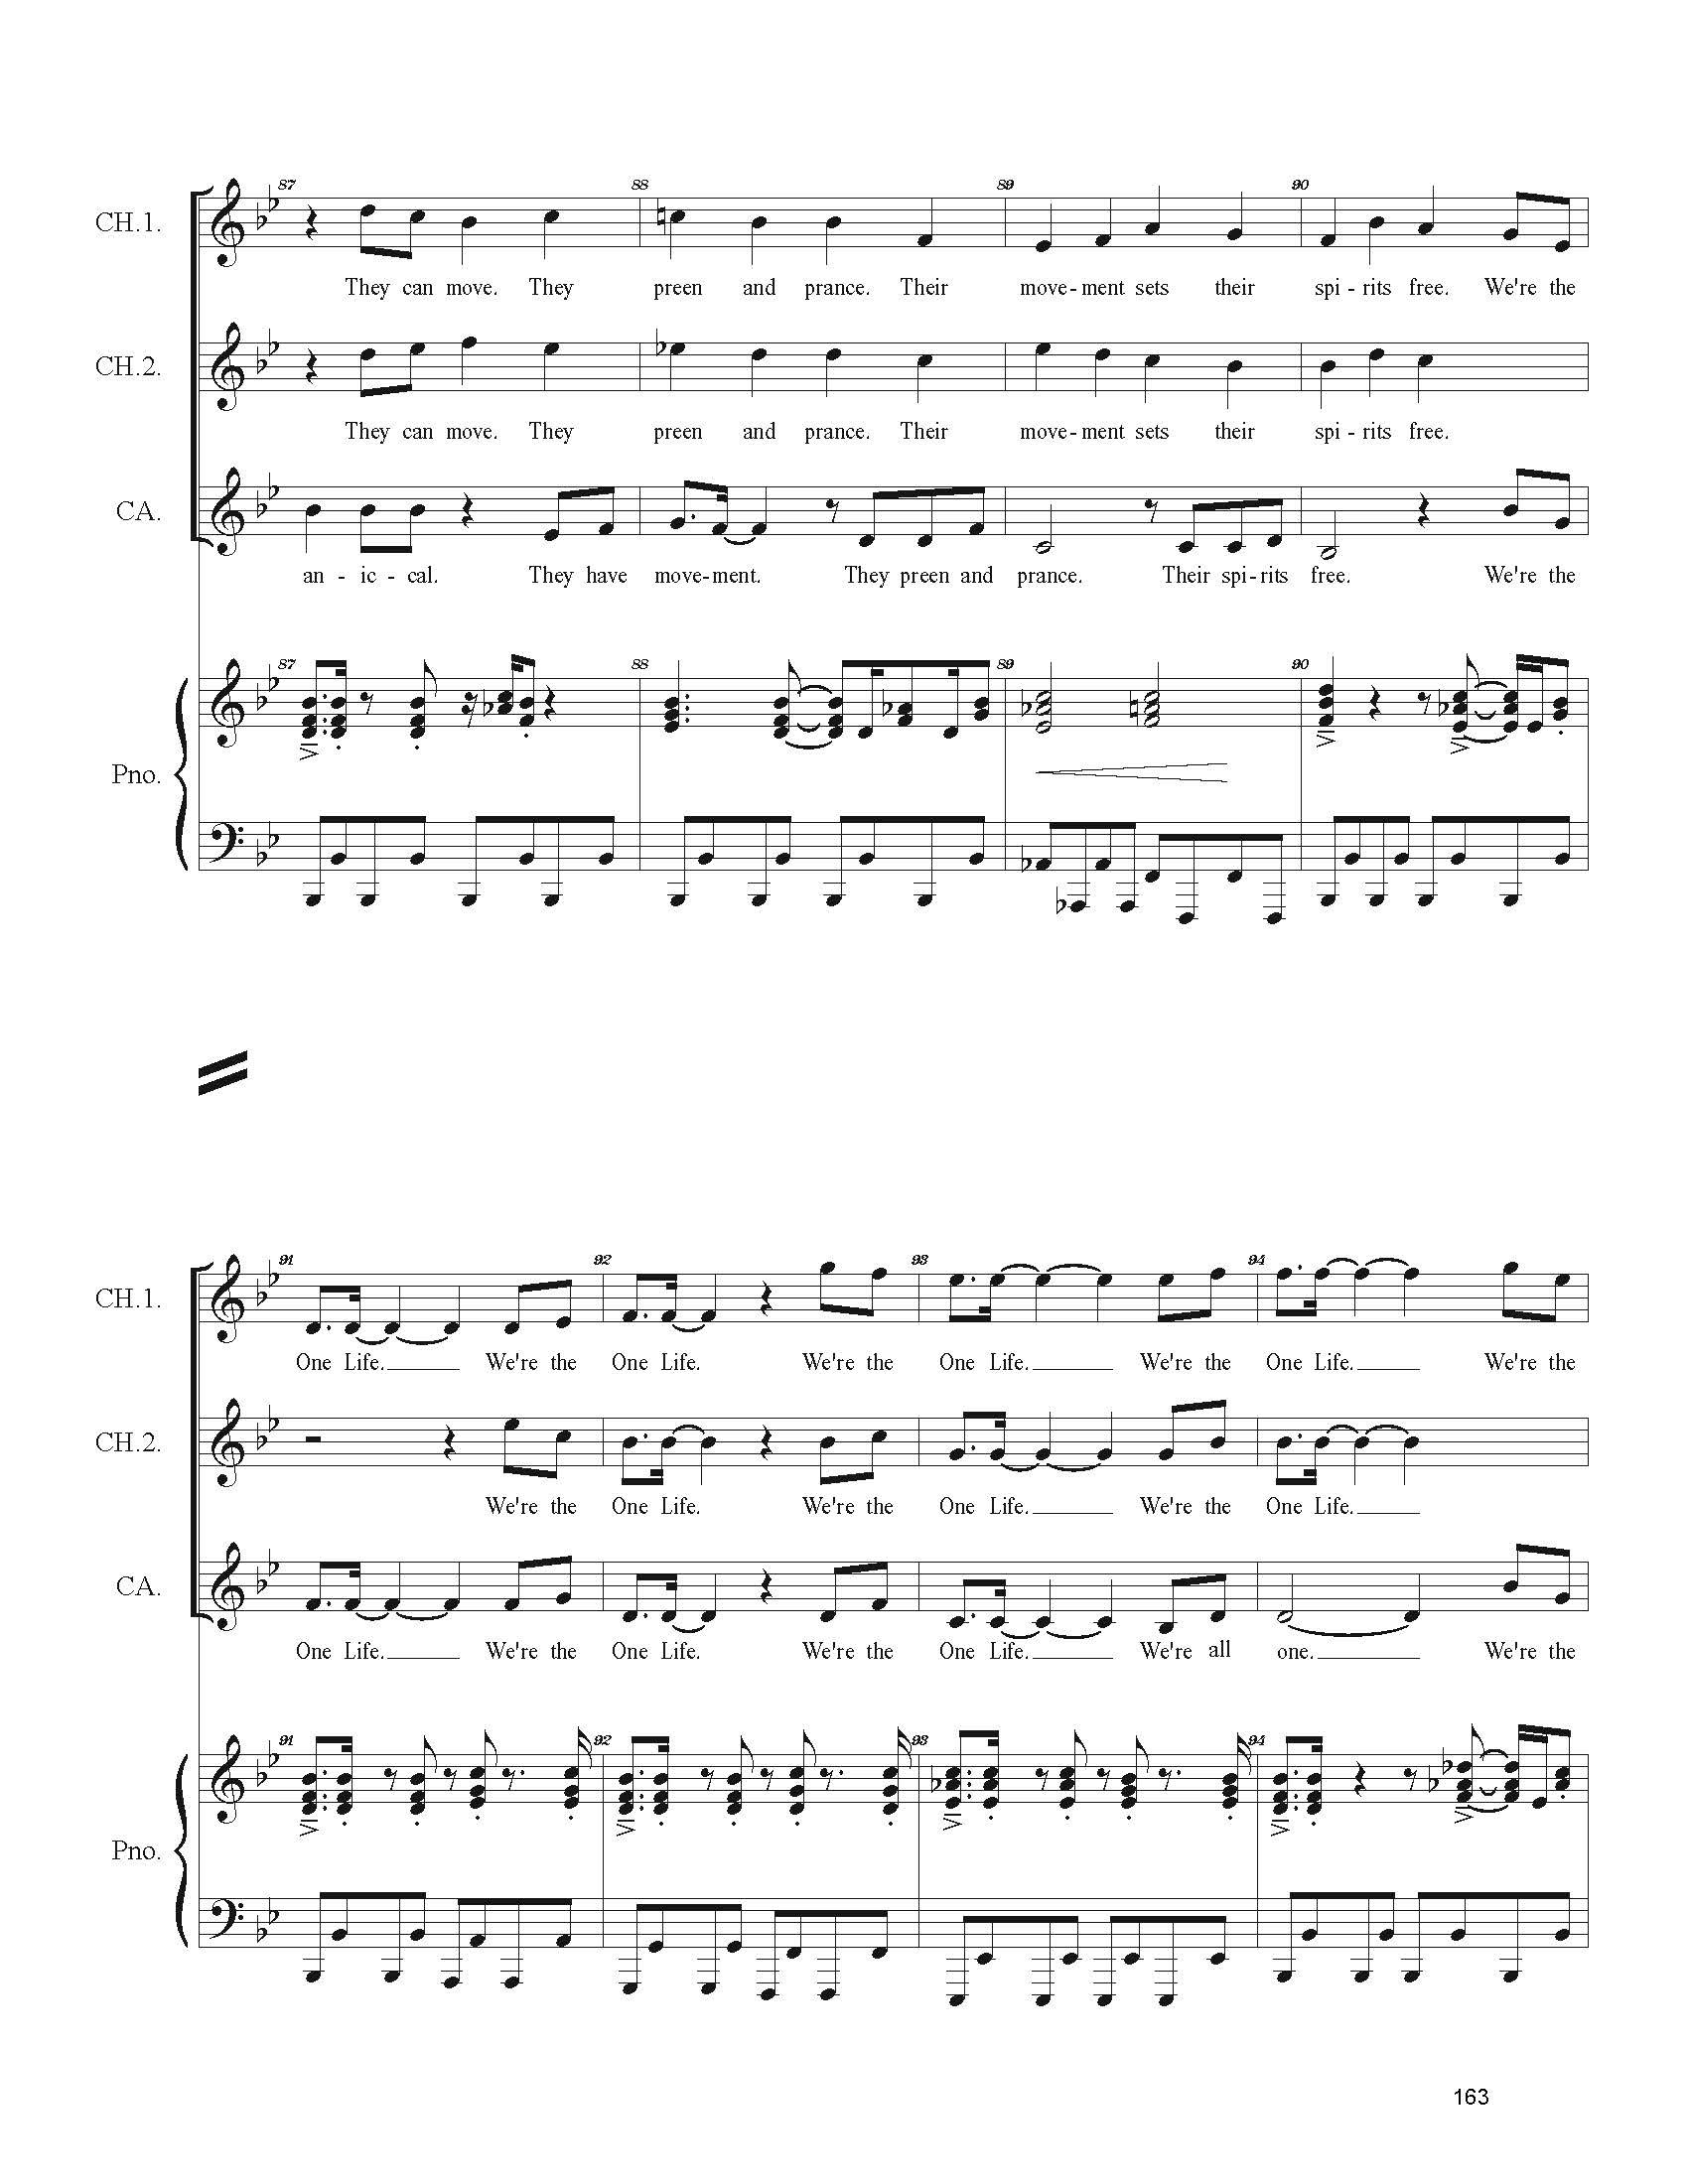 FULL PIANO VOCAL SCORE DRAFT 1 - Score_Page_163.jpg